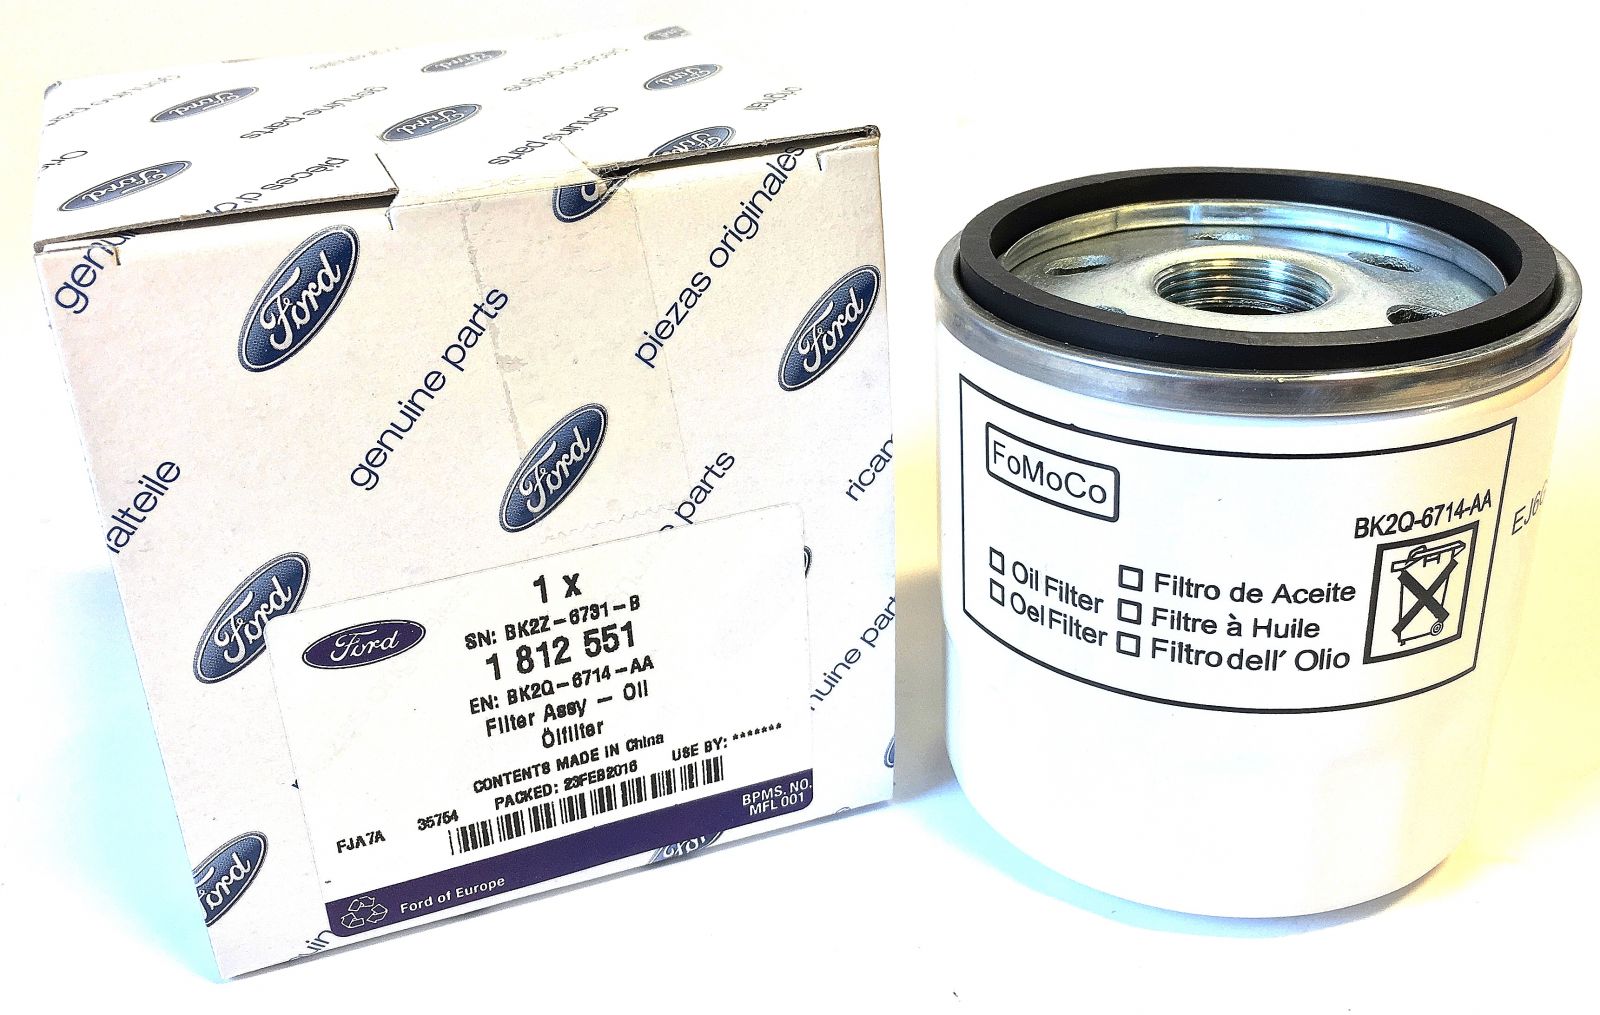 1812551 - O.E Boxed Oil Filter